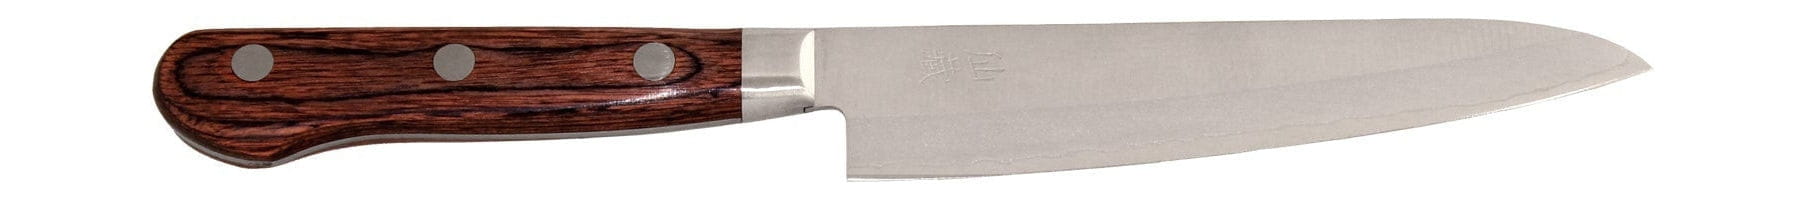 Senzo klædt som 04 Universal Knife, 13,5 cm